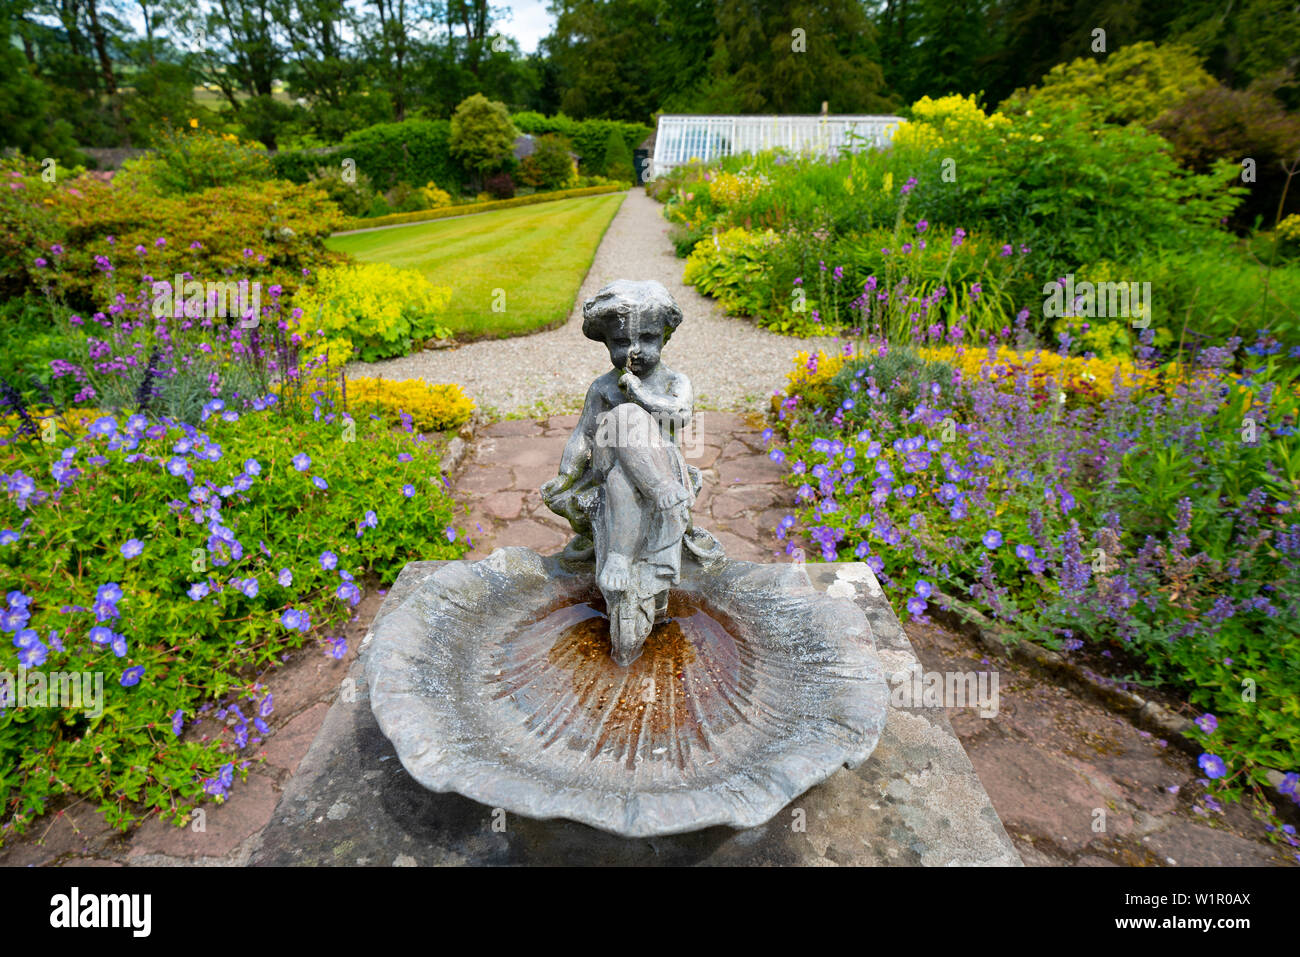 Detail of ornate birdbath in Walled Garden at NTS Geilston Garden in Cardross, Argyll and Bute, Scotland, UK Stock Photo